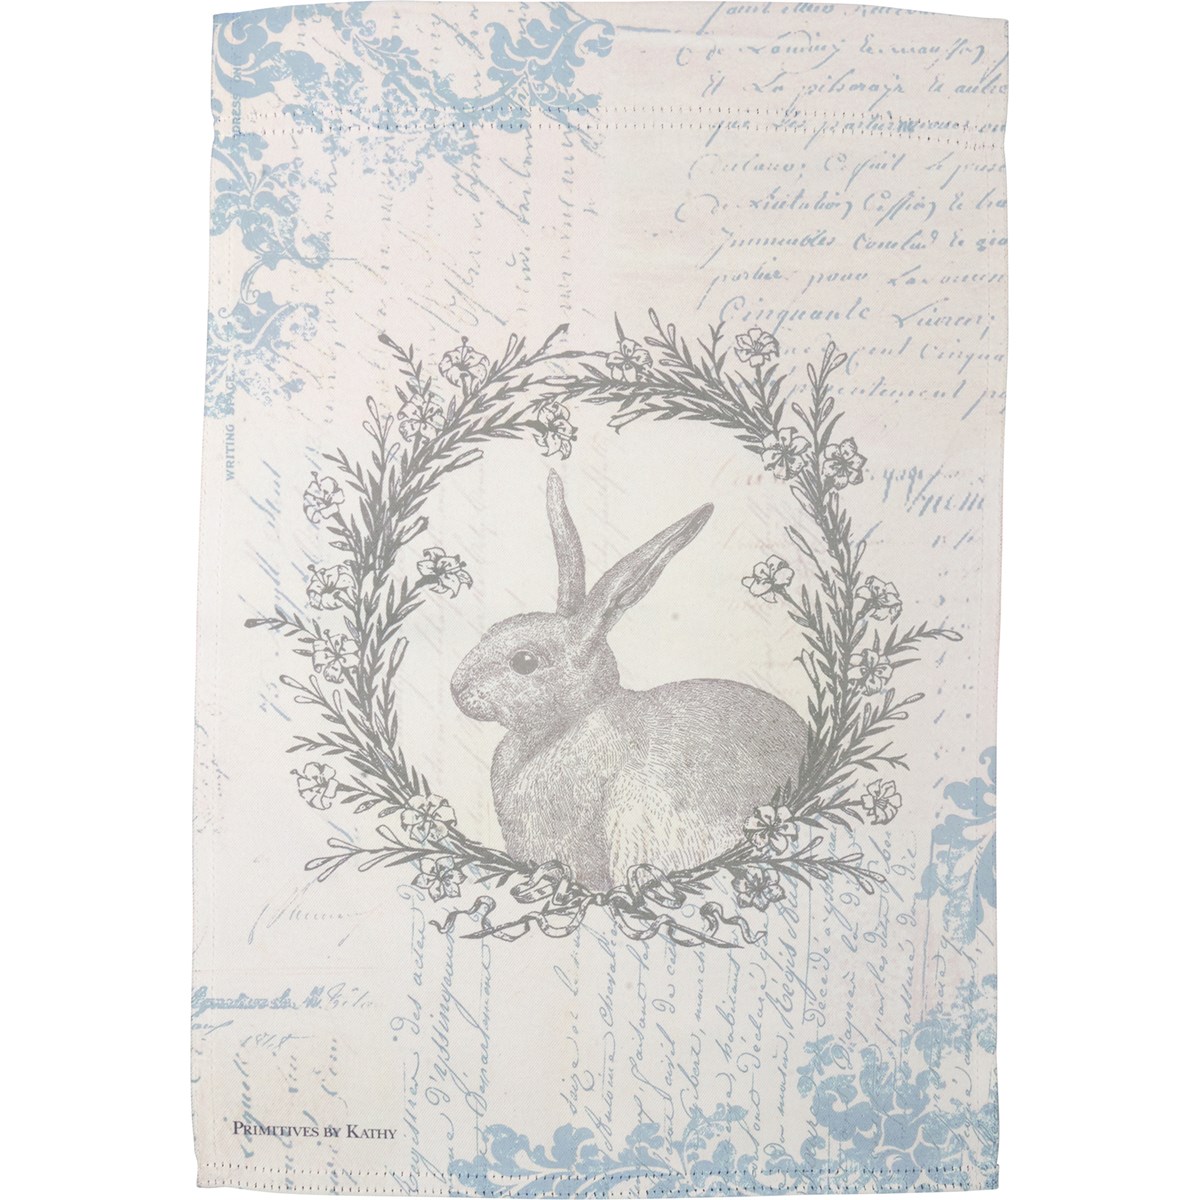 Rabbit Crest Garden Flag - Polyester